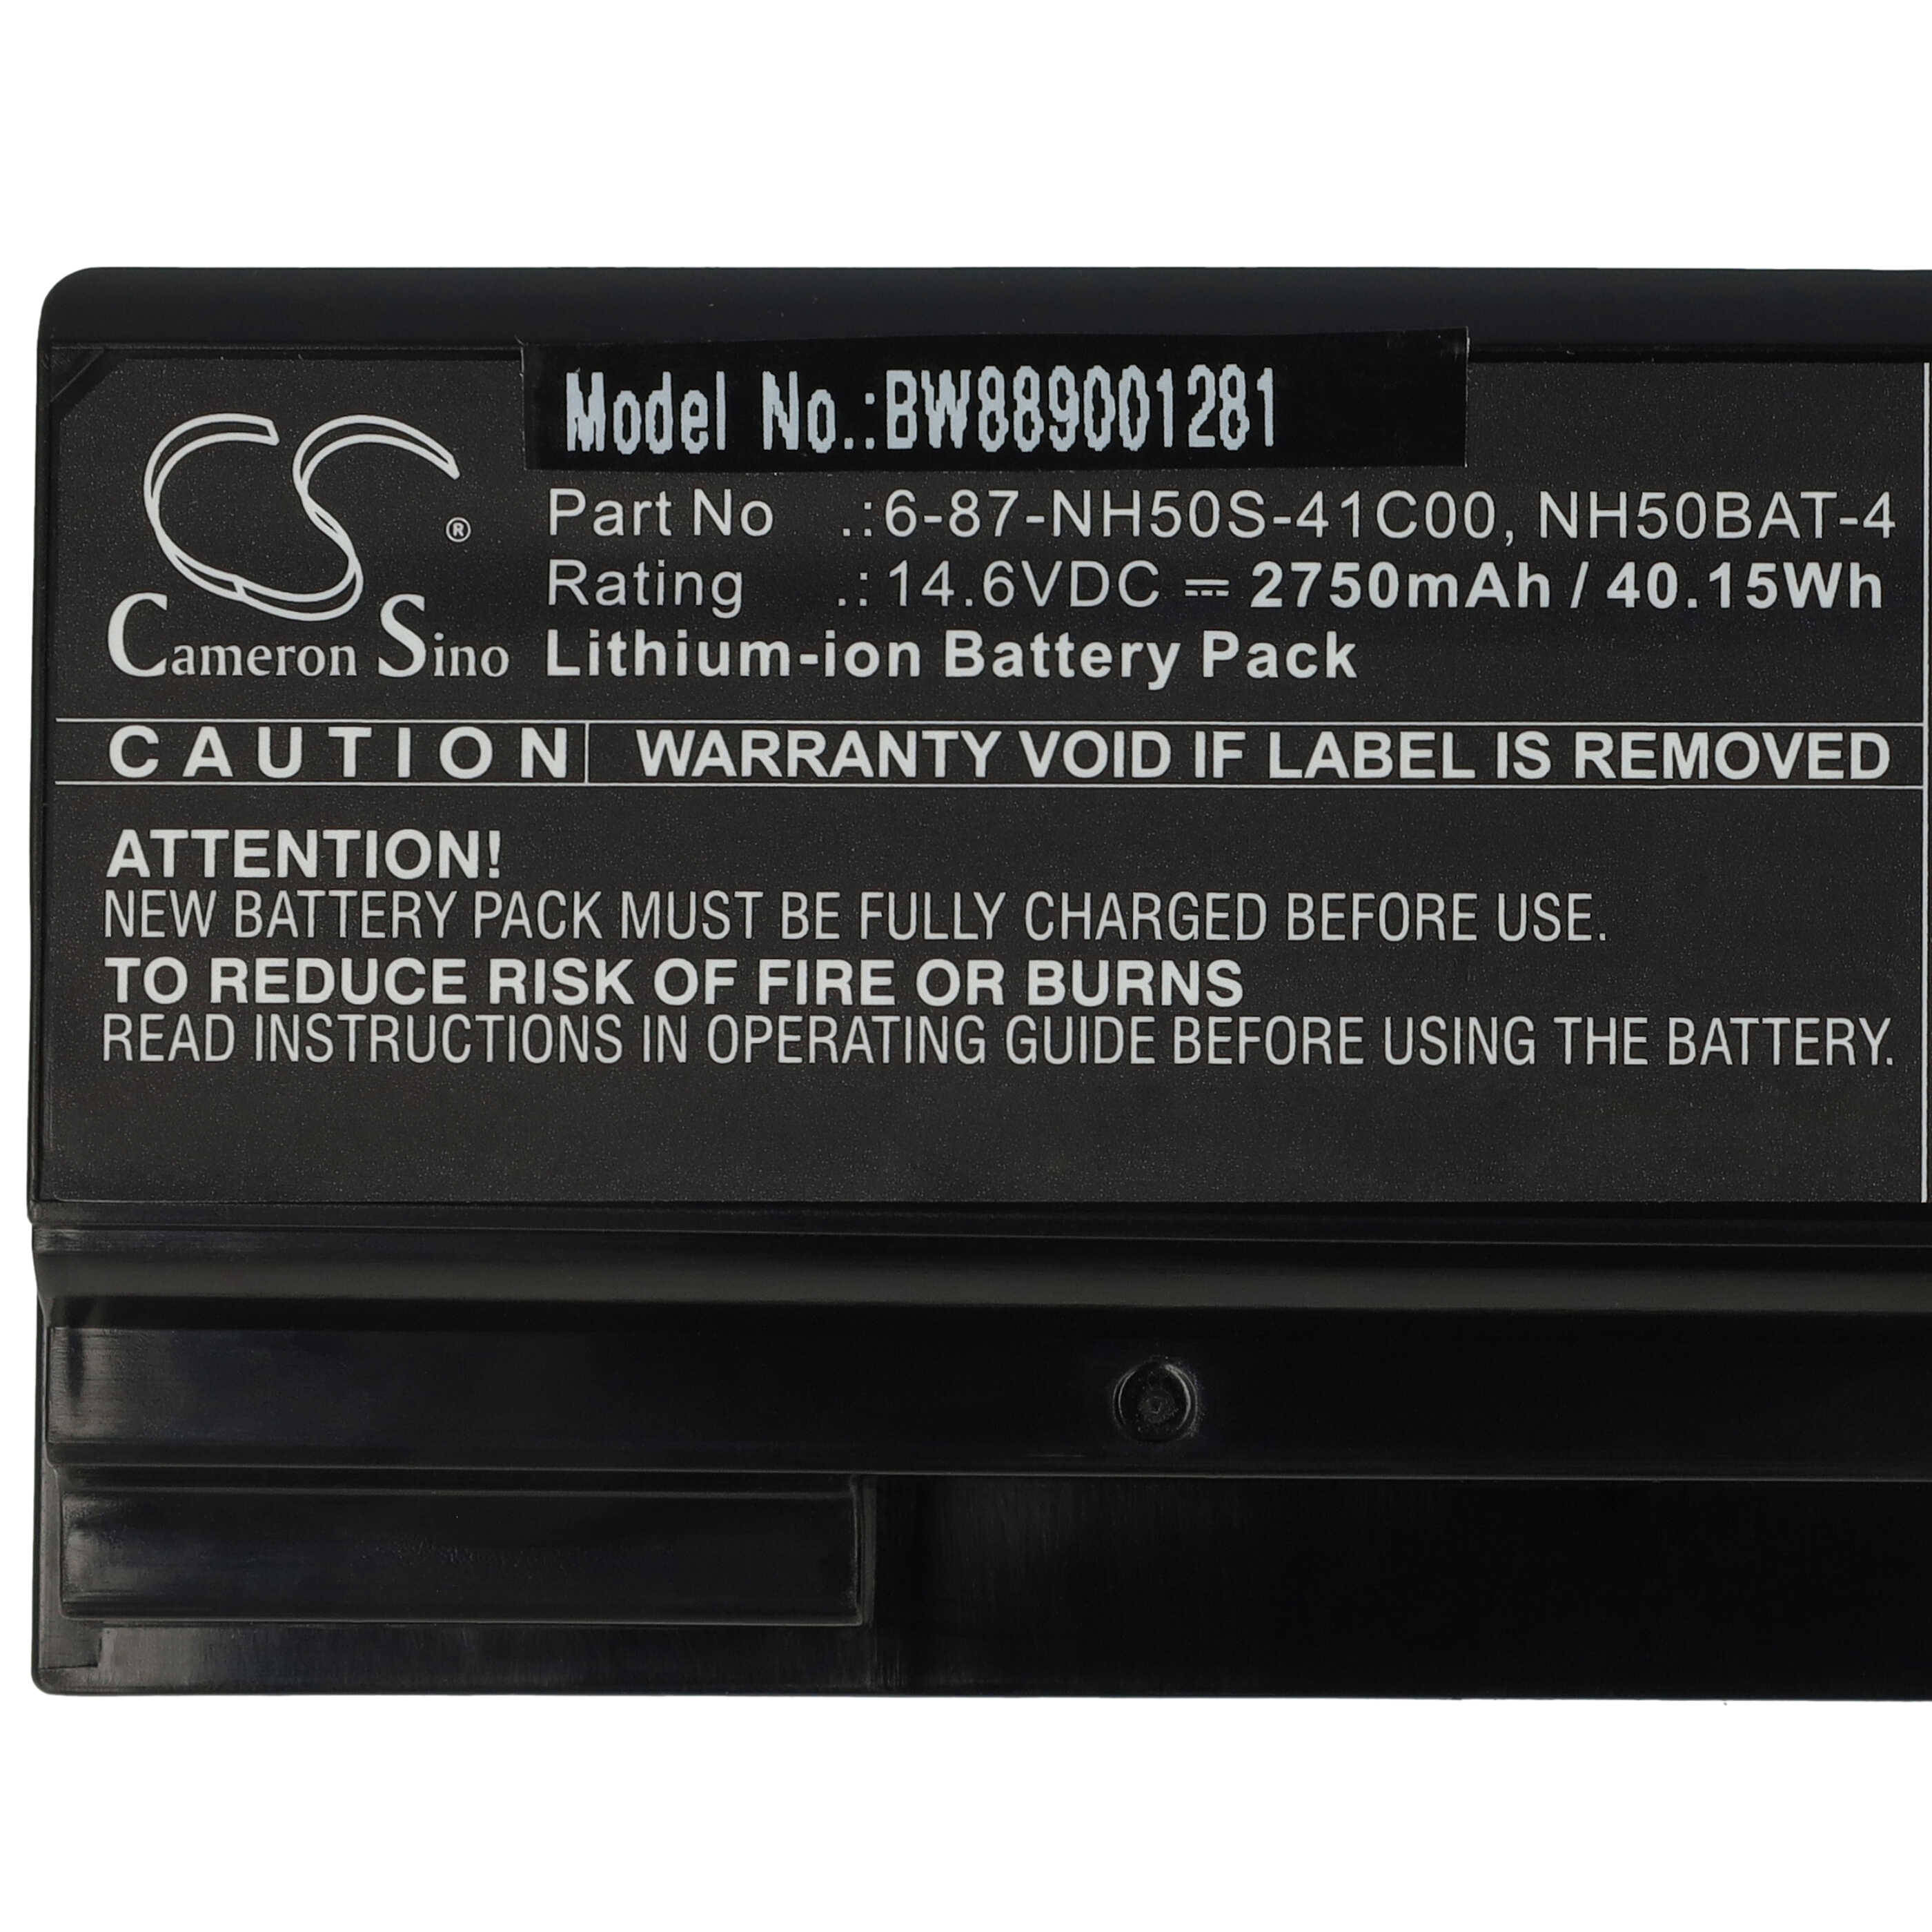 Akumulator do laptopa zamiennik Clevo NH50BAT-4, 6-87-NH50S-41C00 - 2750 mAh 14,6 V Li-Ion